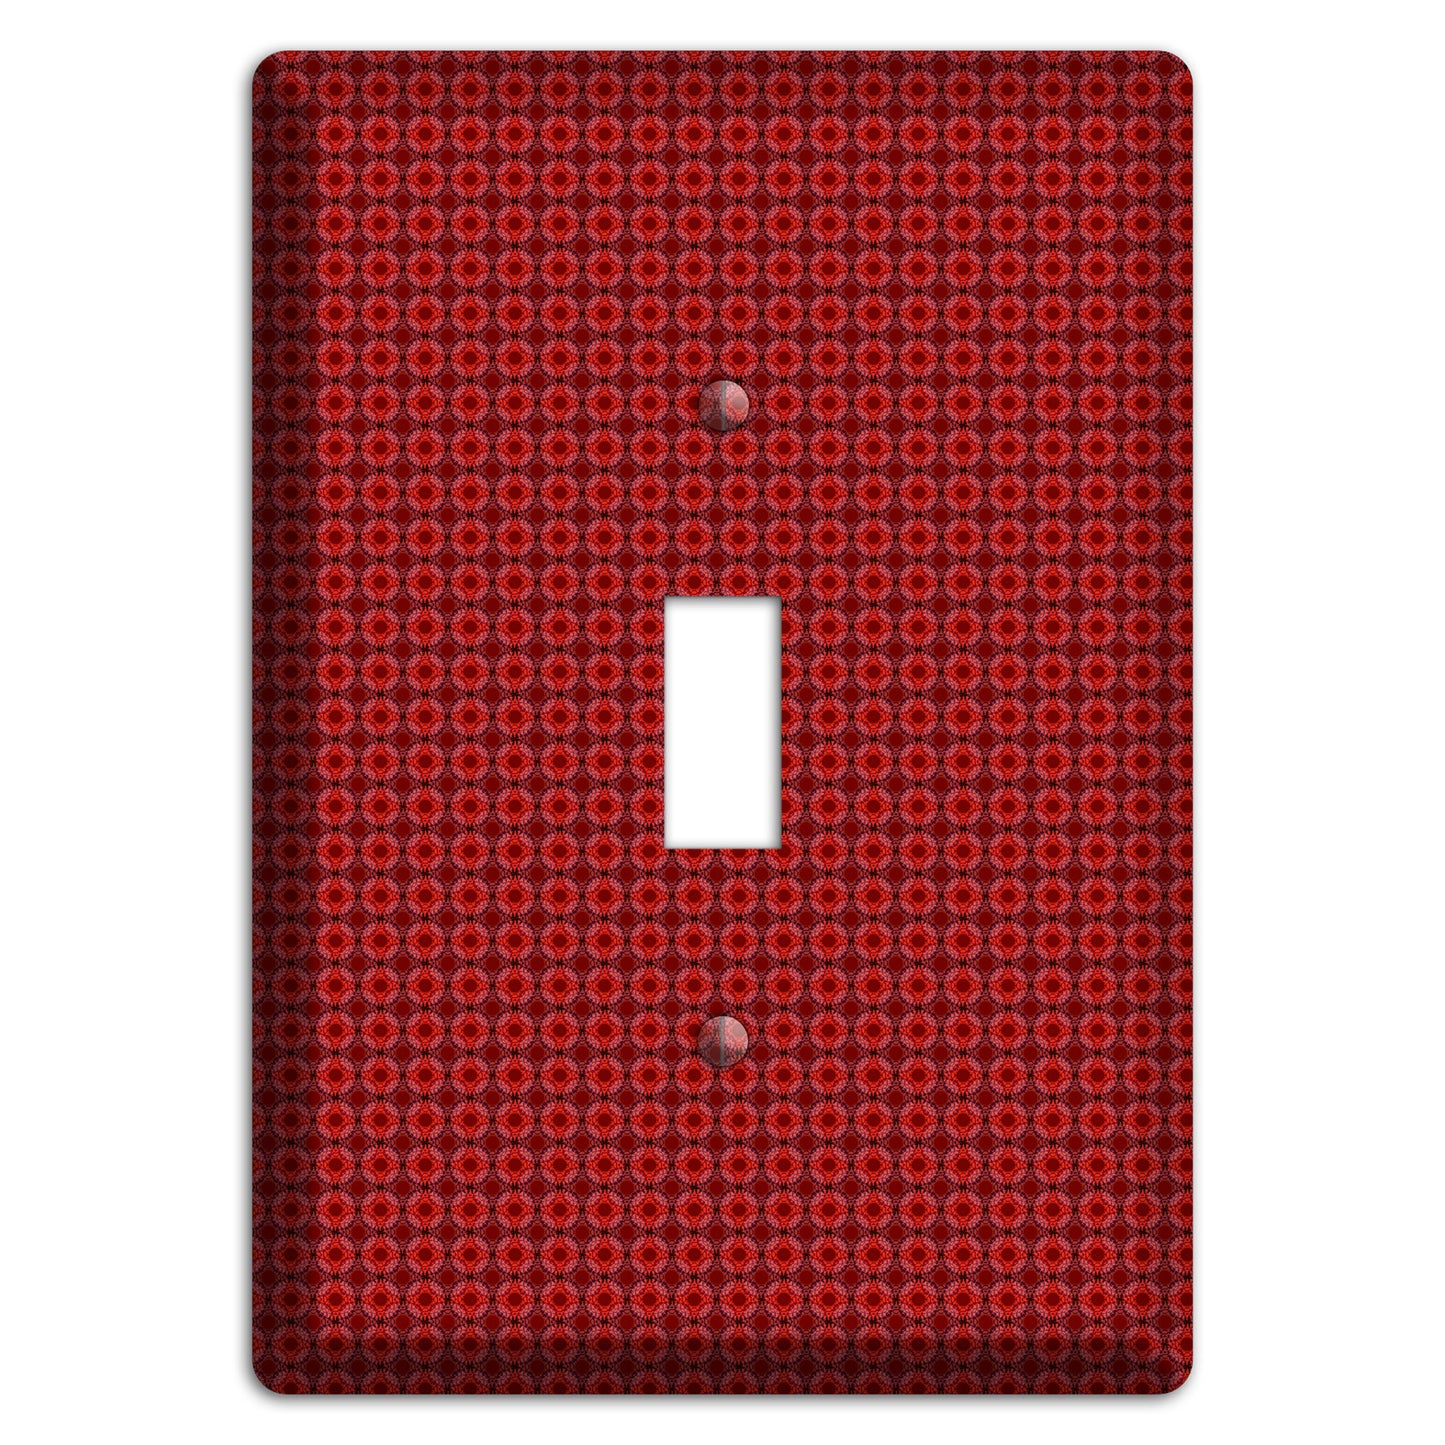 Multi Red Tiled Foulard Cover Plates